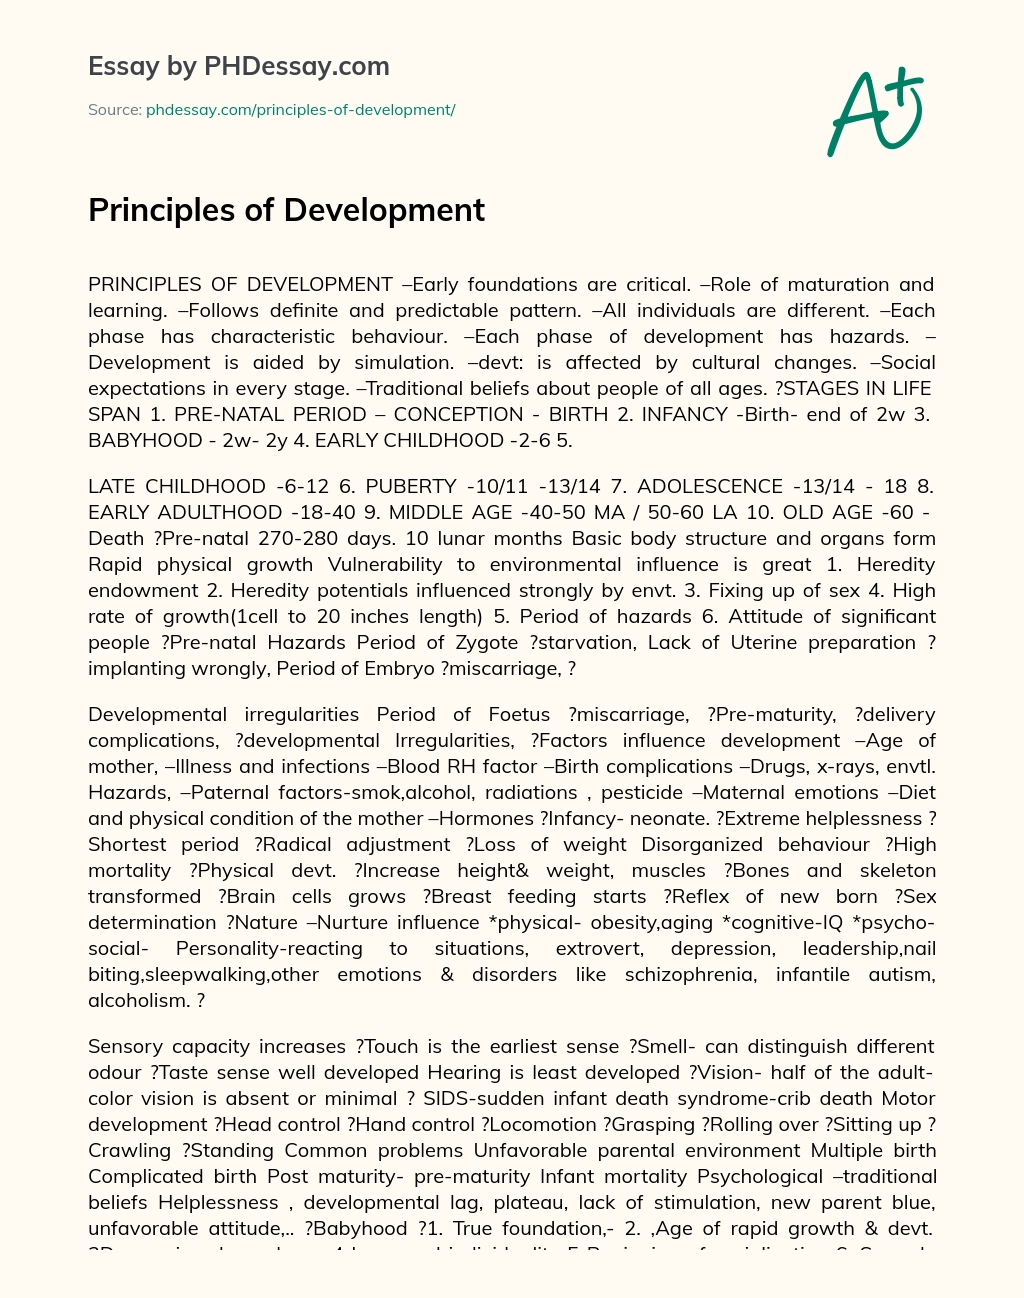 Principles of Development essay